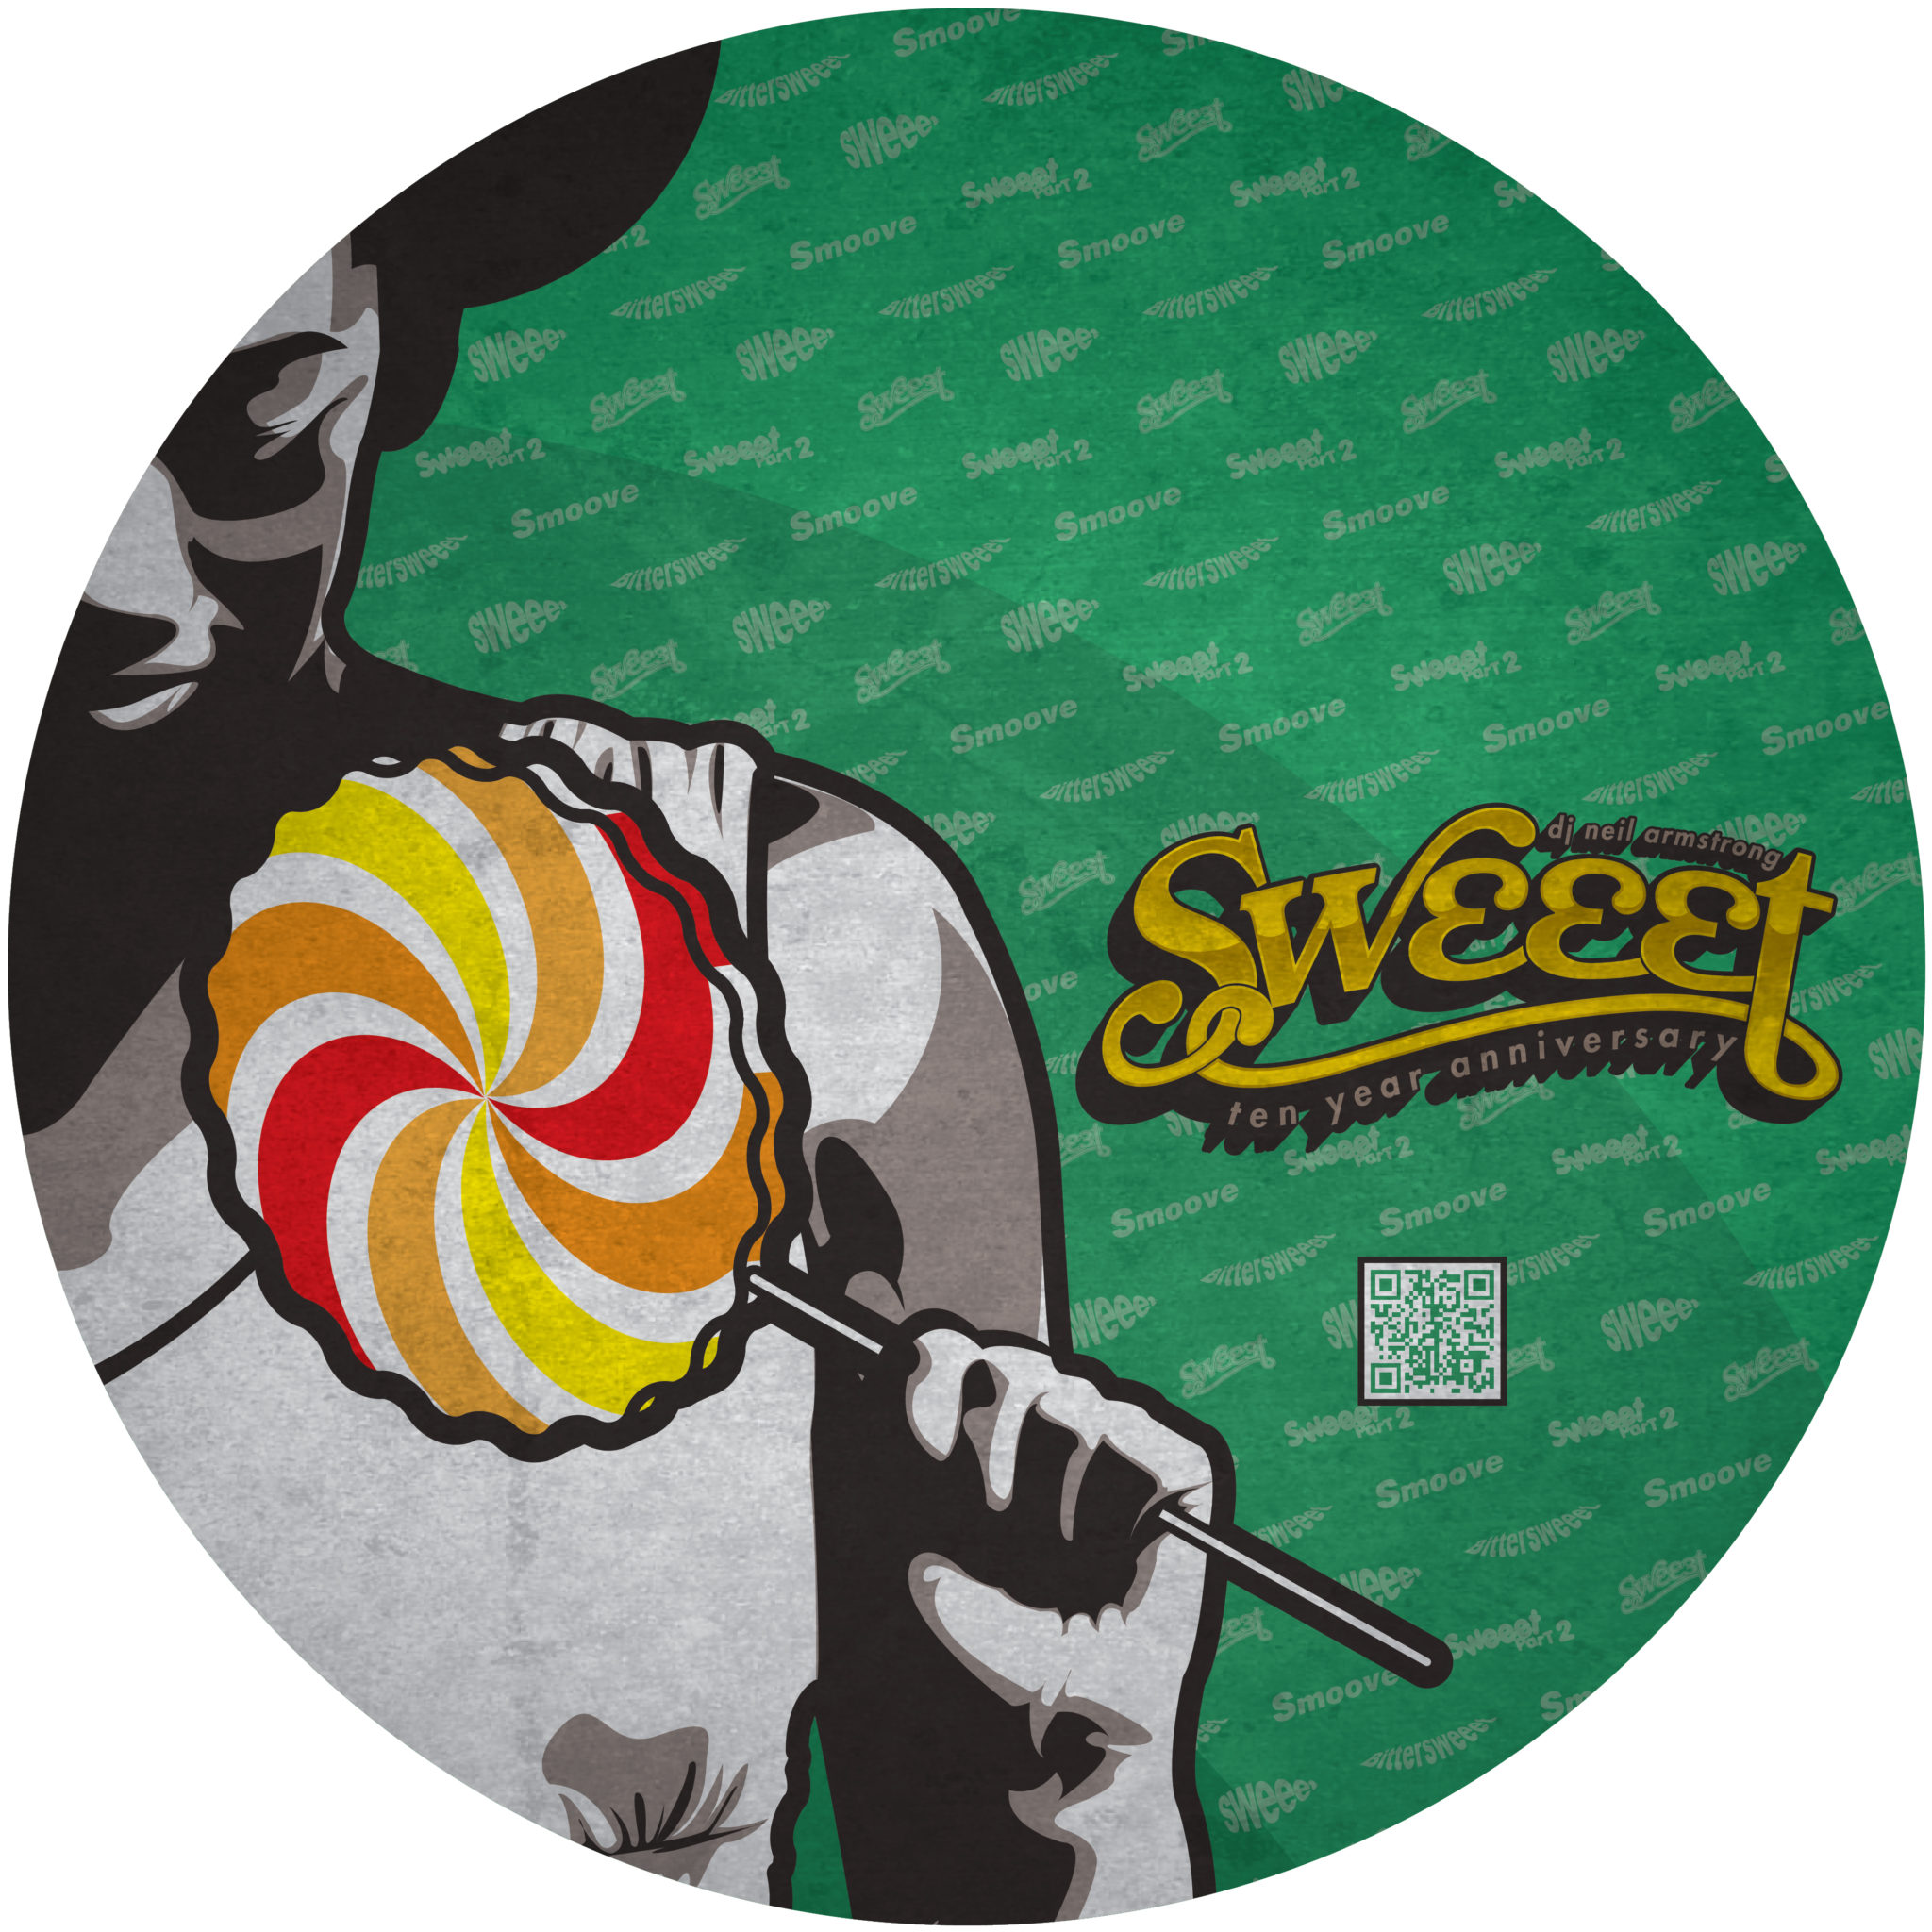 Sweeet 10 Year Anniversary Slipmats w/ FREE DIGITAL DLs Sweeet, Sweeet Part 3, Remixes & Rarities 